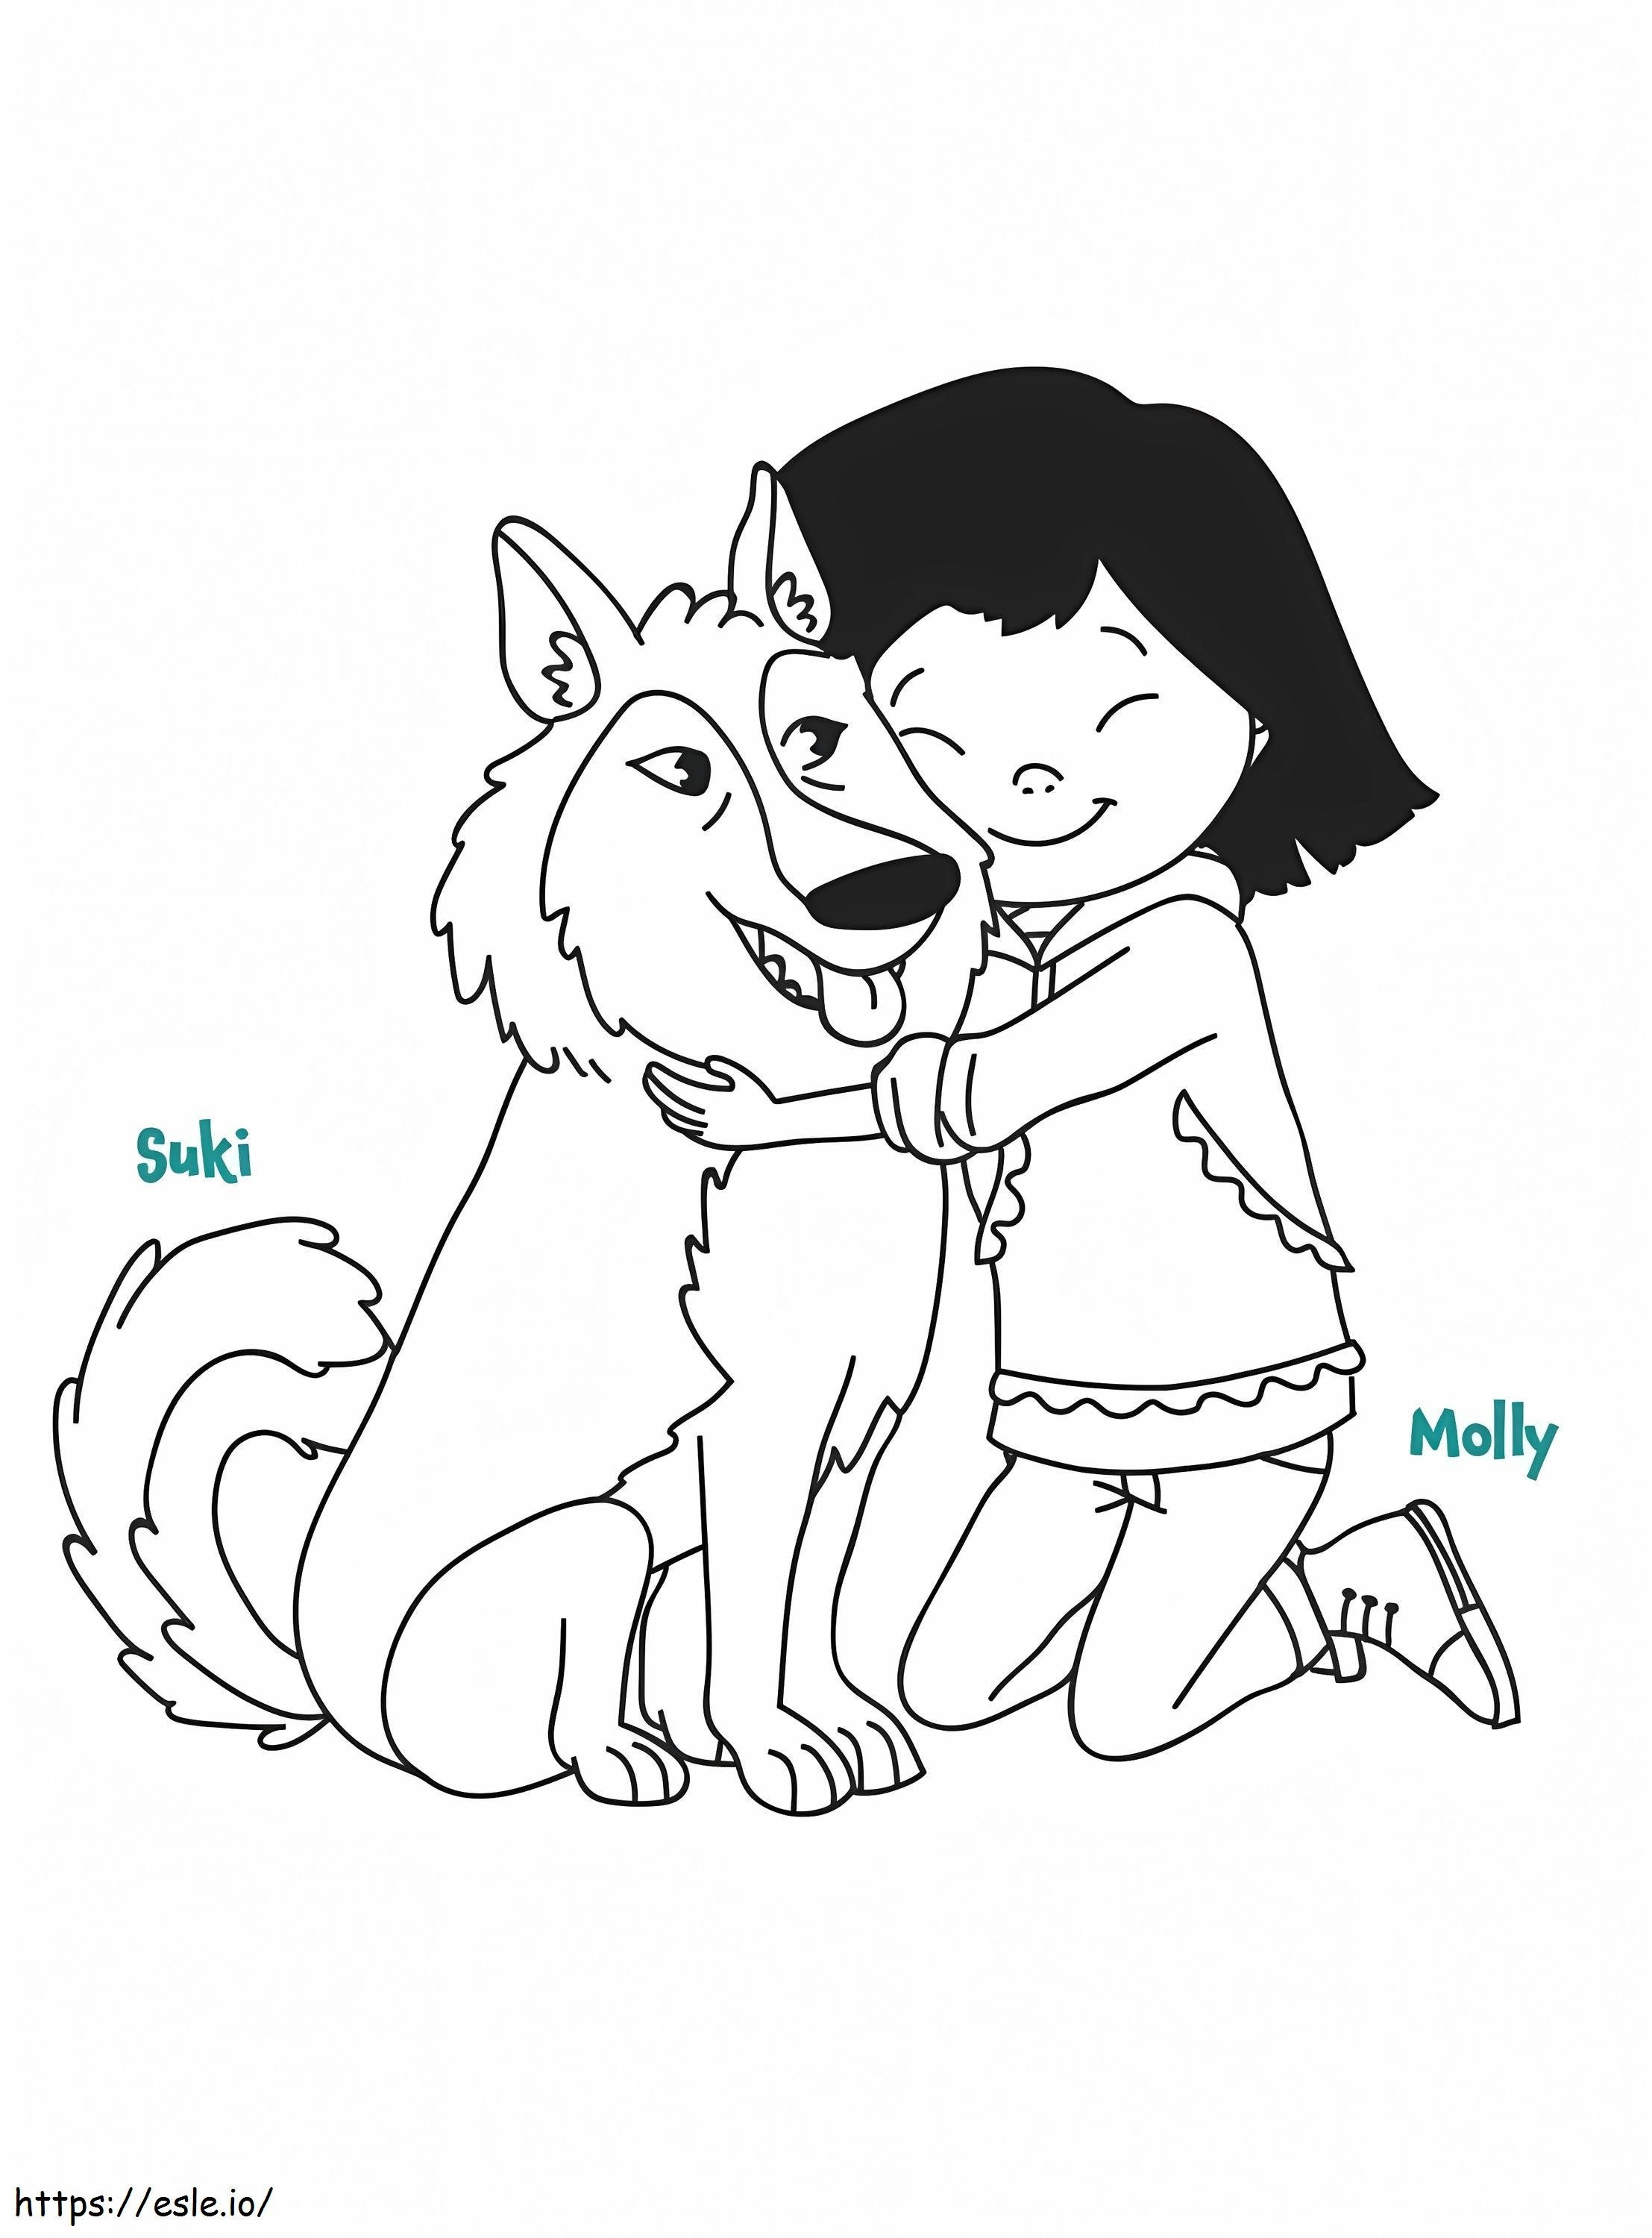 Denali'li Molly'den Molly ve Suki boyama